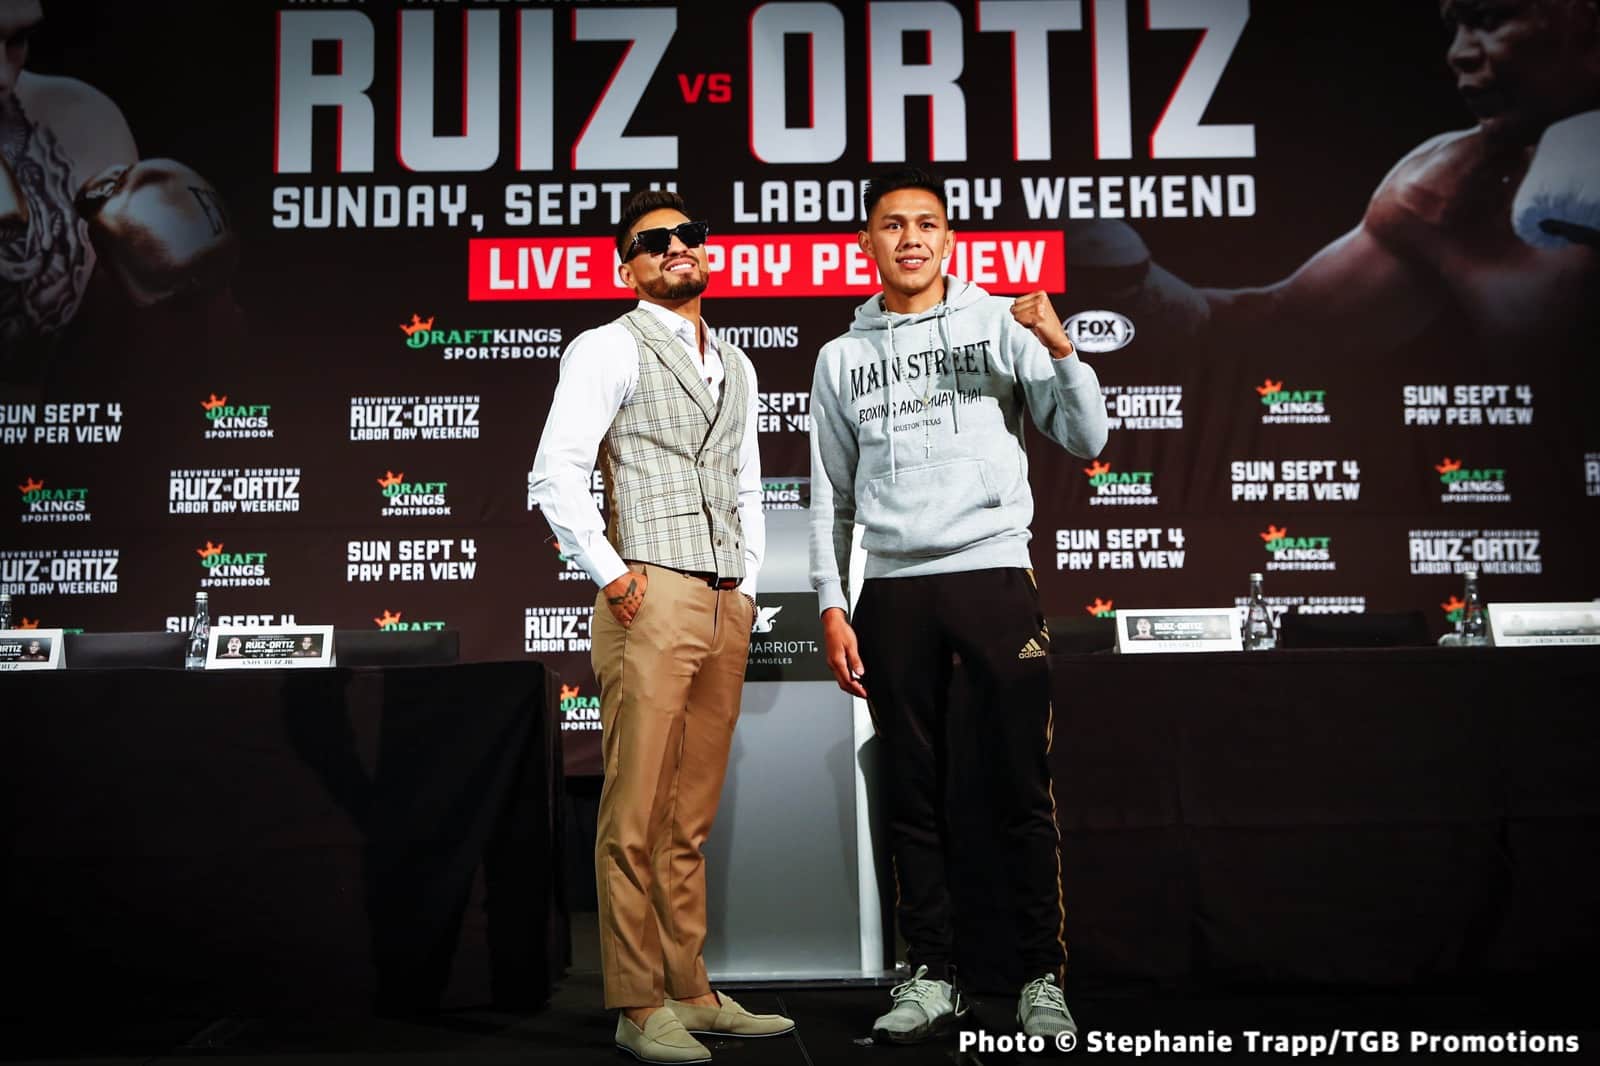 WATCH LIVE: Ruiz vs Ortiz FOX PPV Weigh In